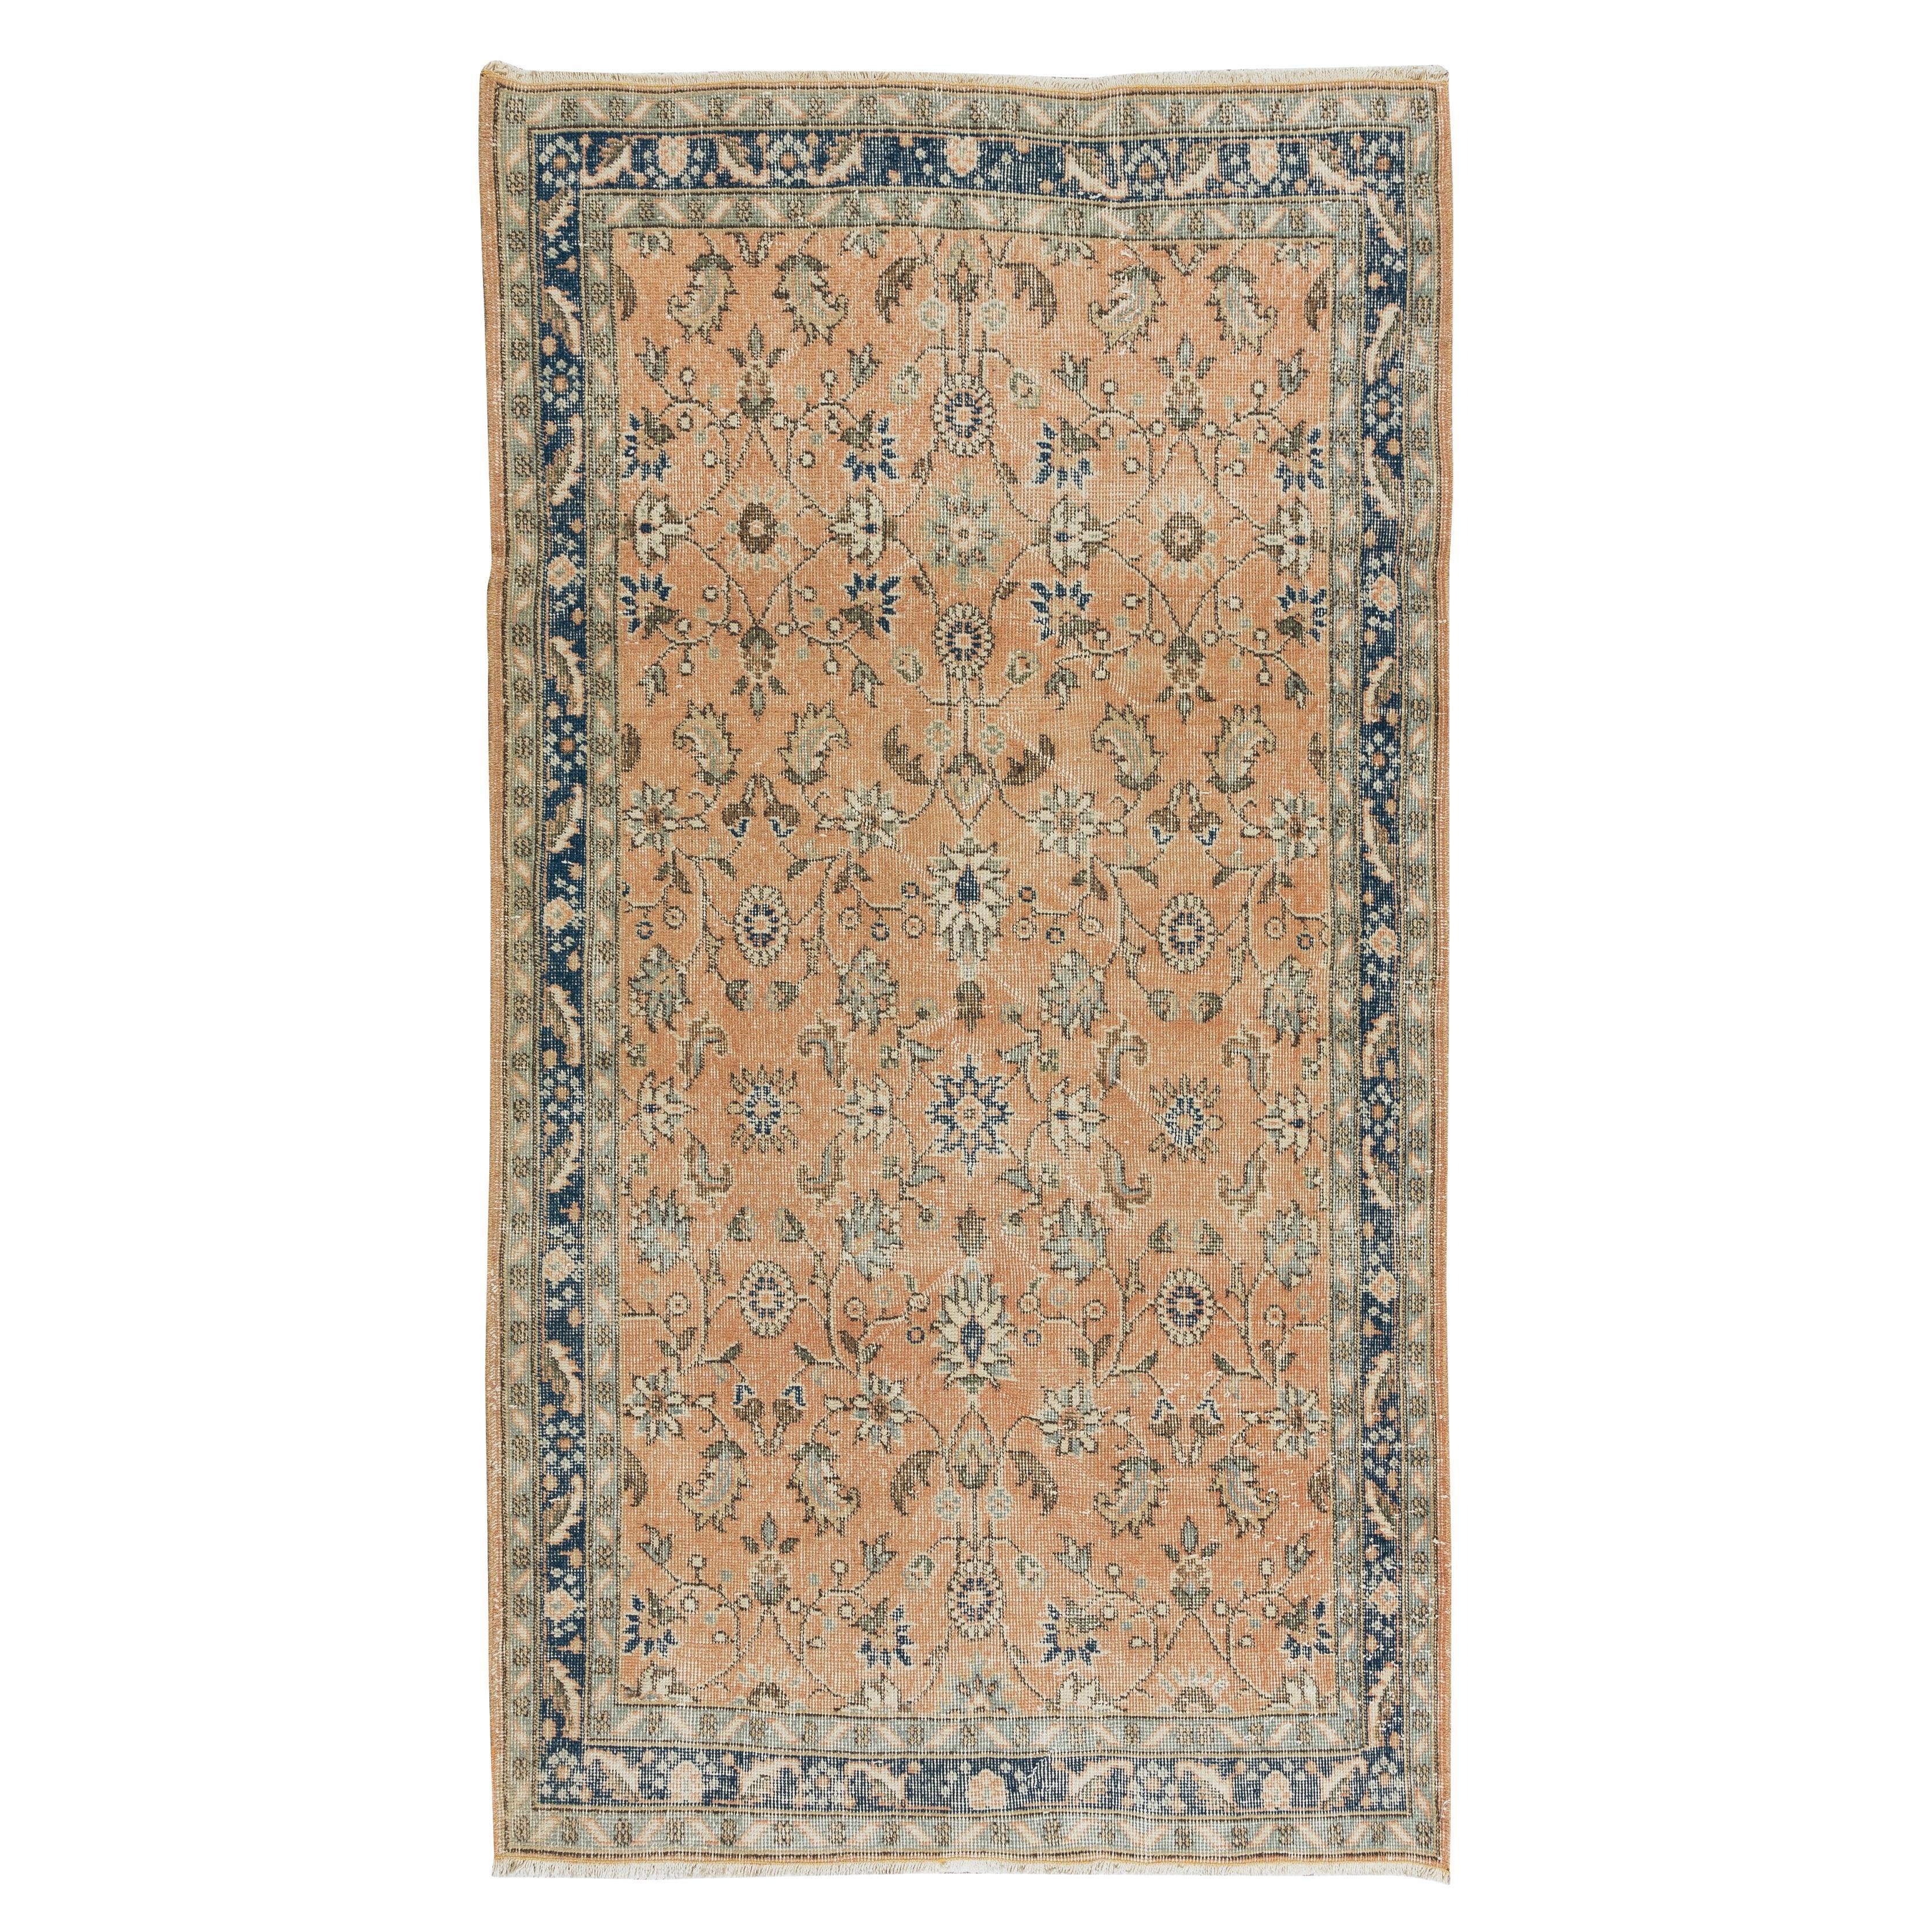 Handmade Floral Pattern Turkish Rug, Authentic Vintage Wool Carpet